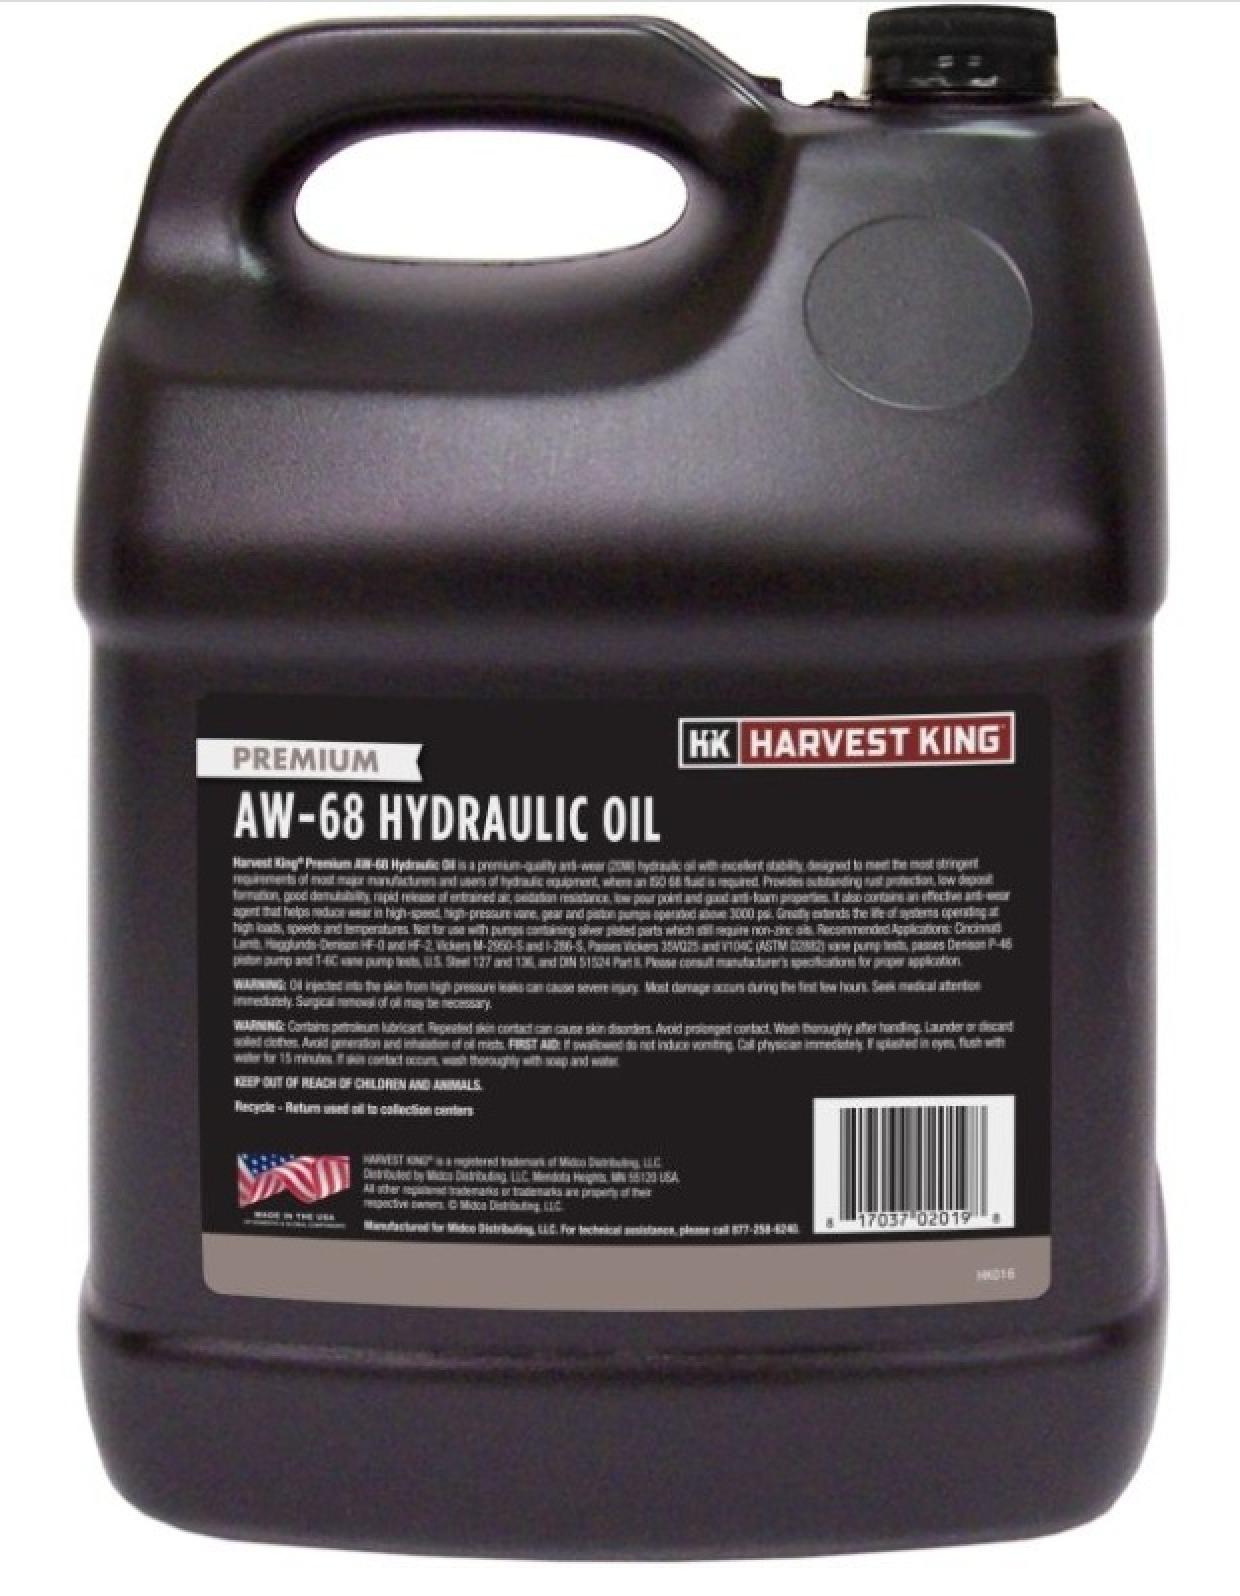 Harvest King Premium AW-68 Hydraulic Oil